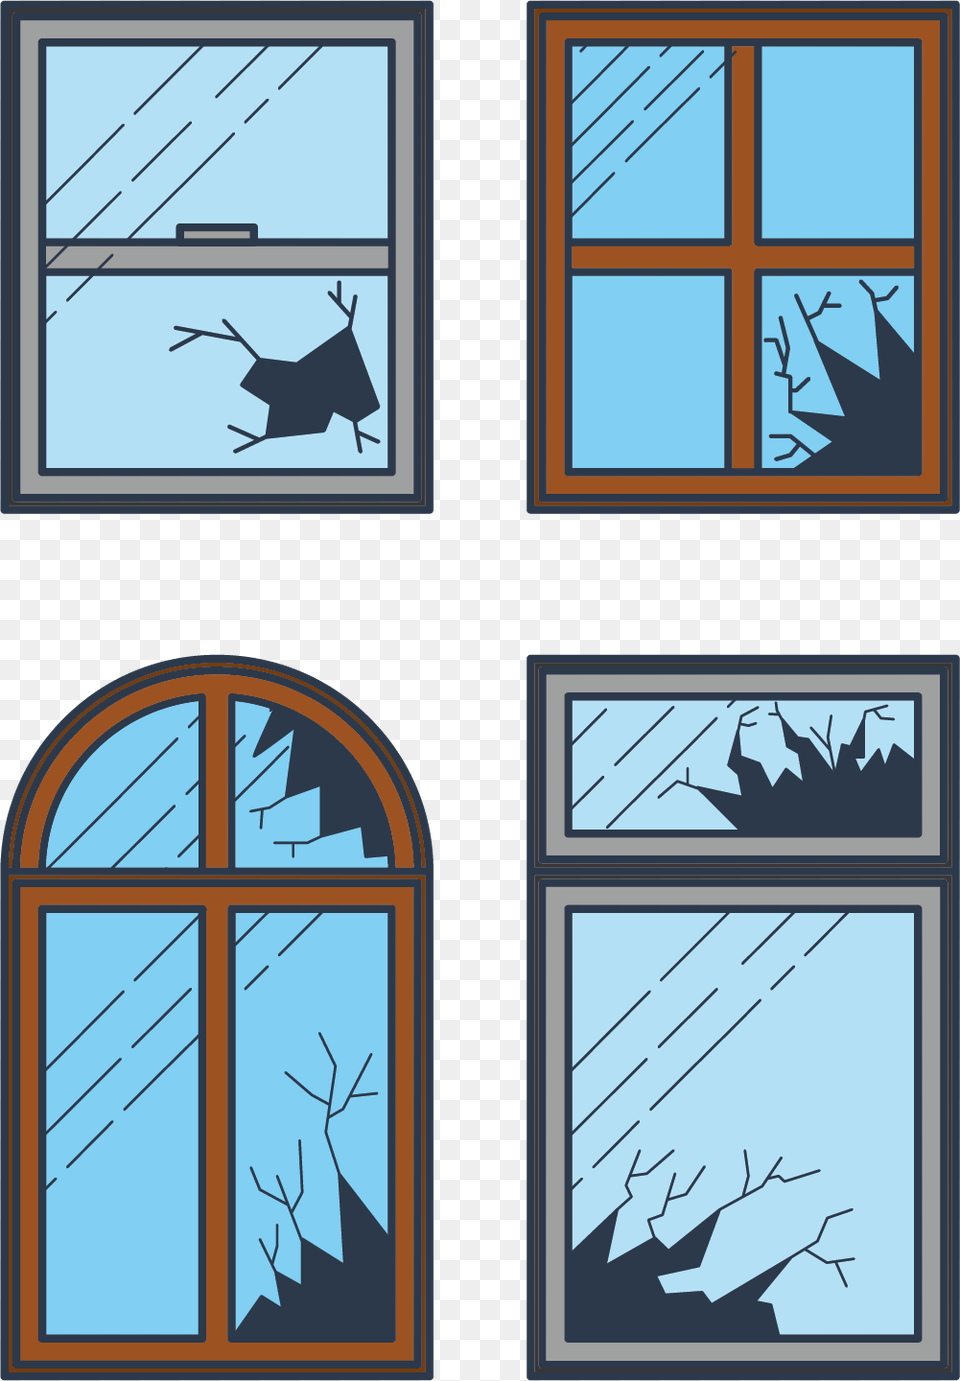 Shatter Broken Windows Theory Clip Art, Window Free Png Download